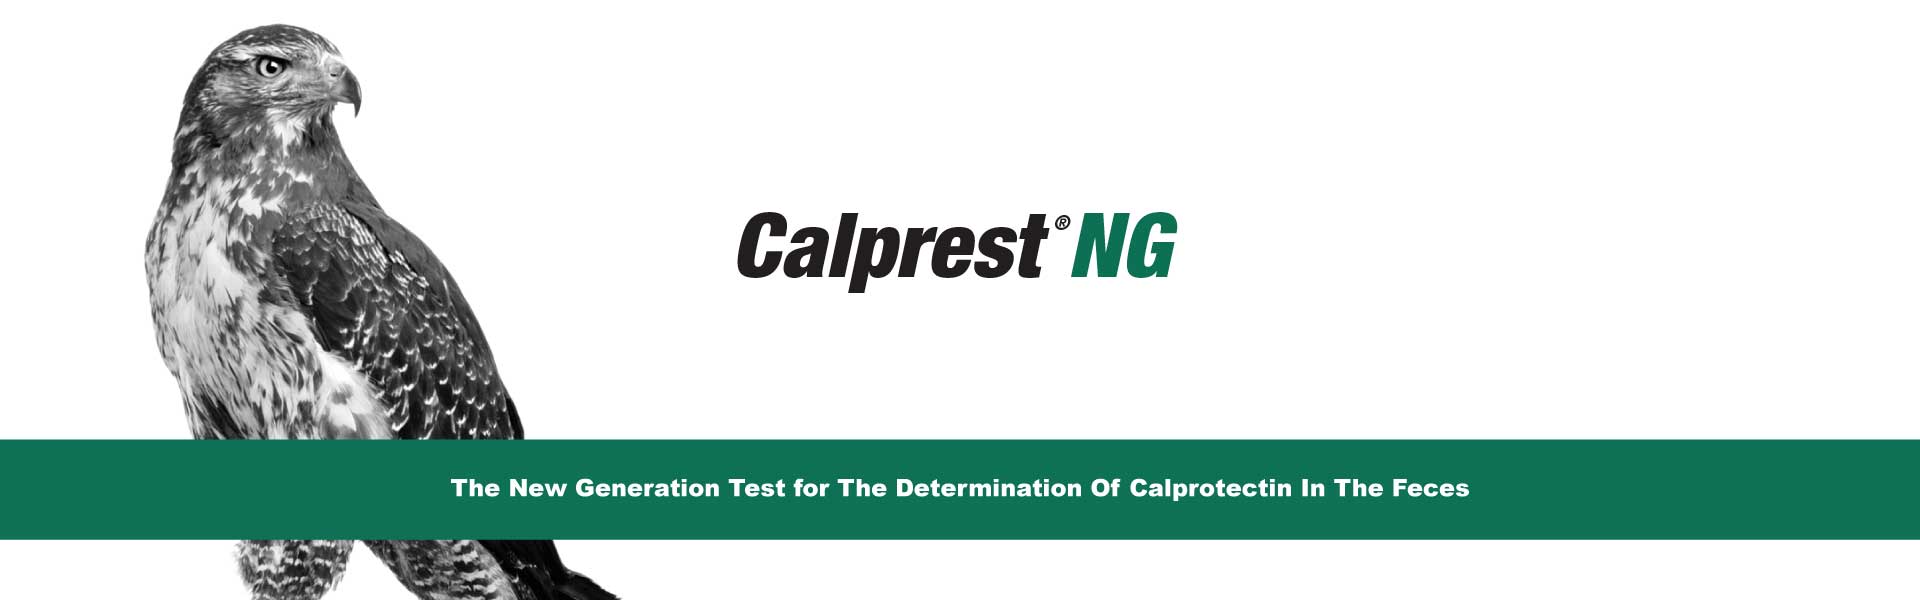 Calprest NG, the immunoenzymatic test from Eurospita